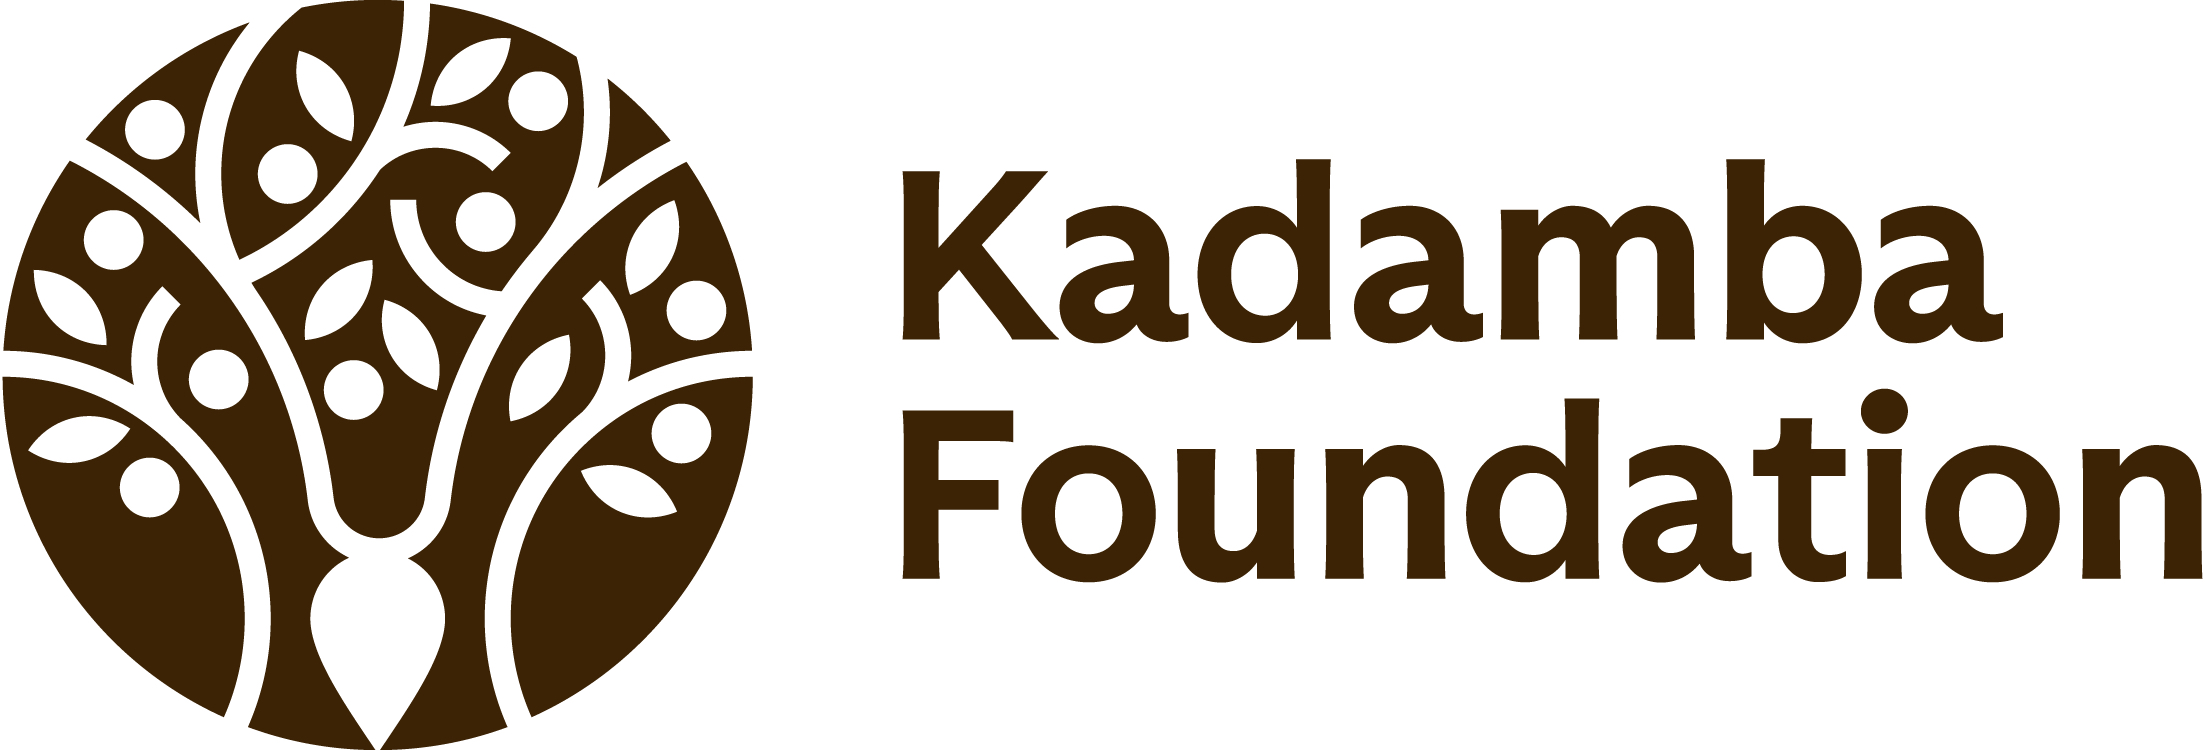 Kadamba Foundation